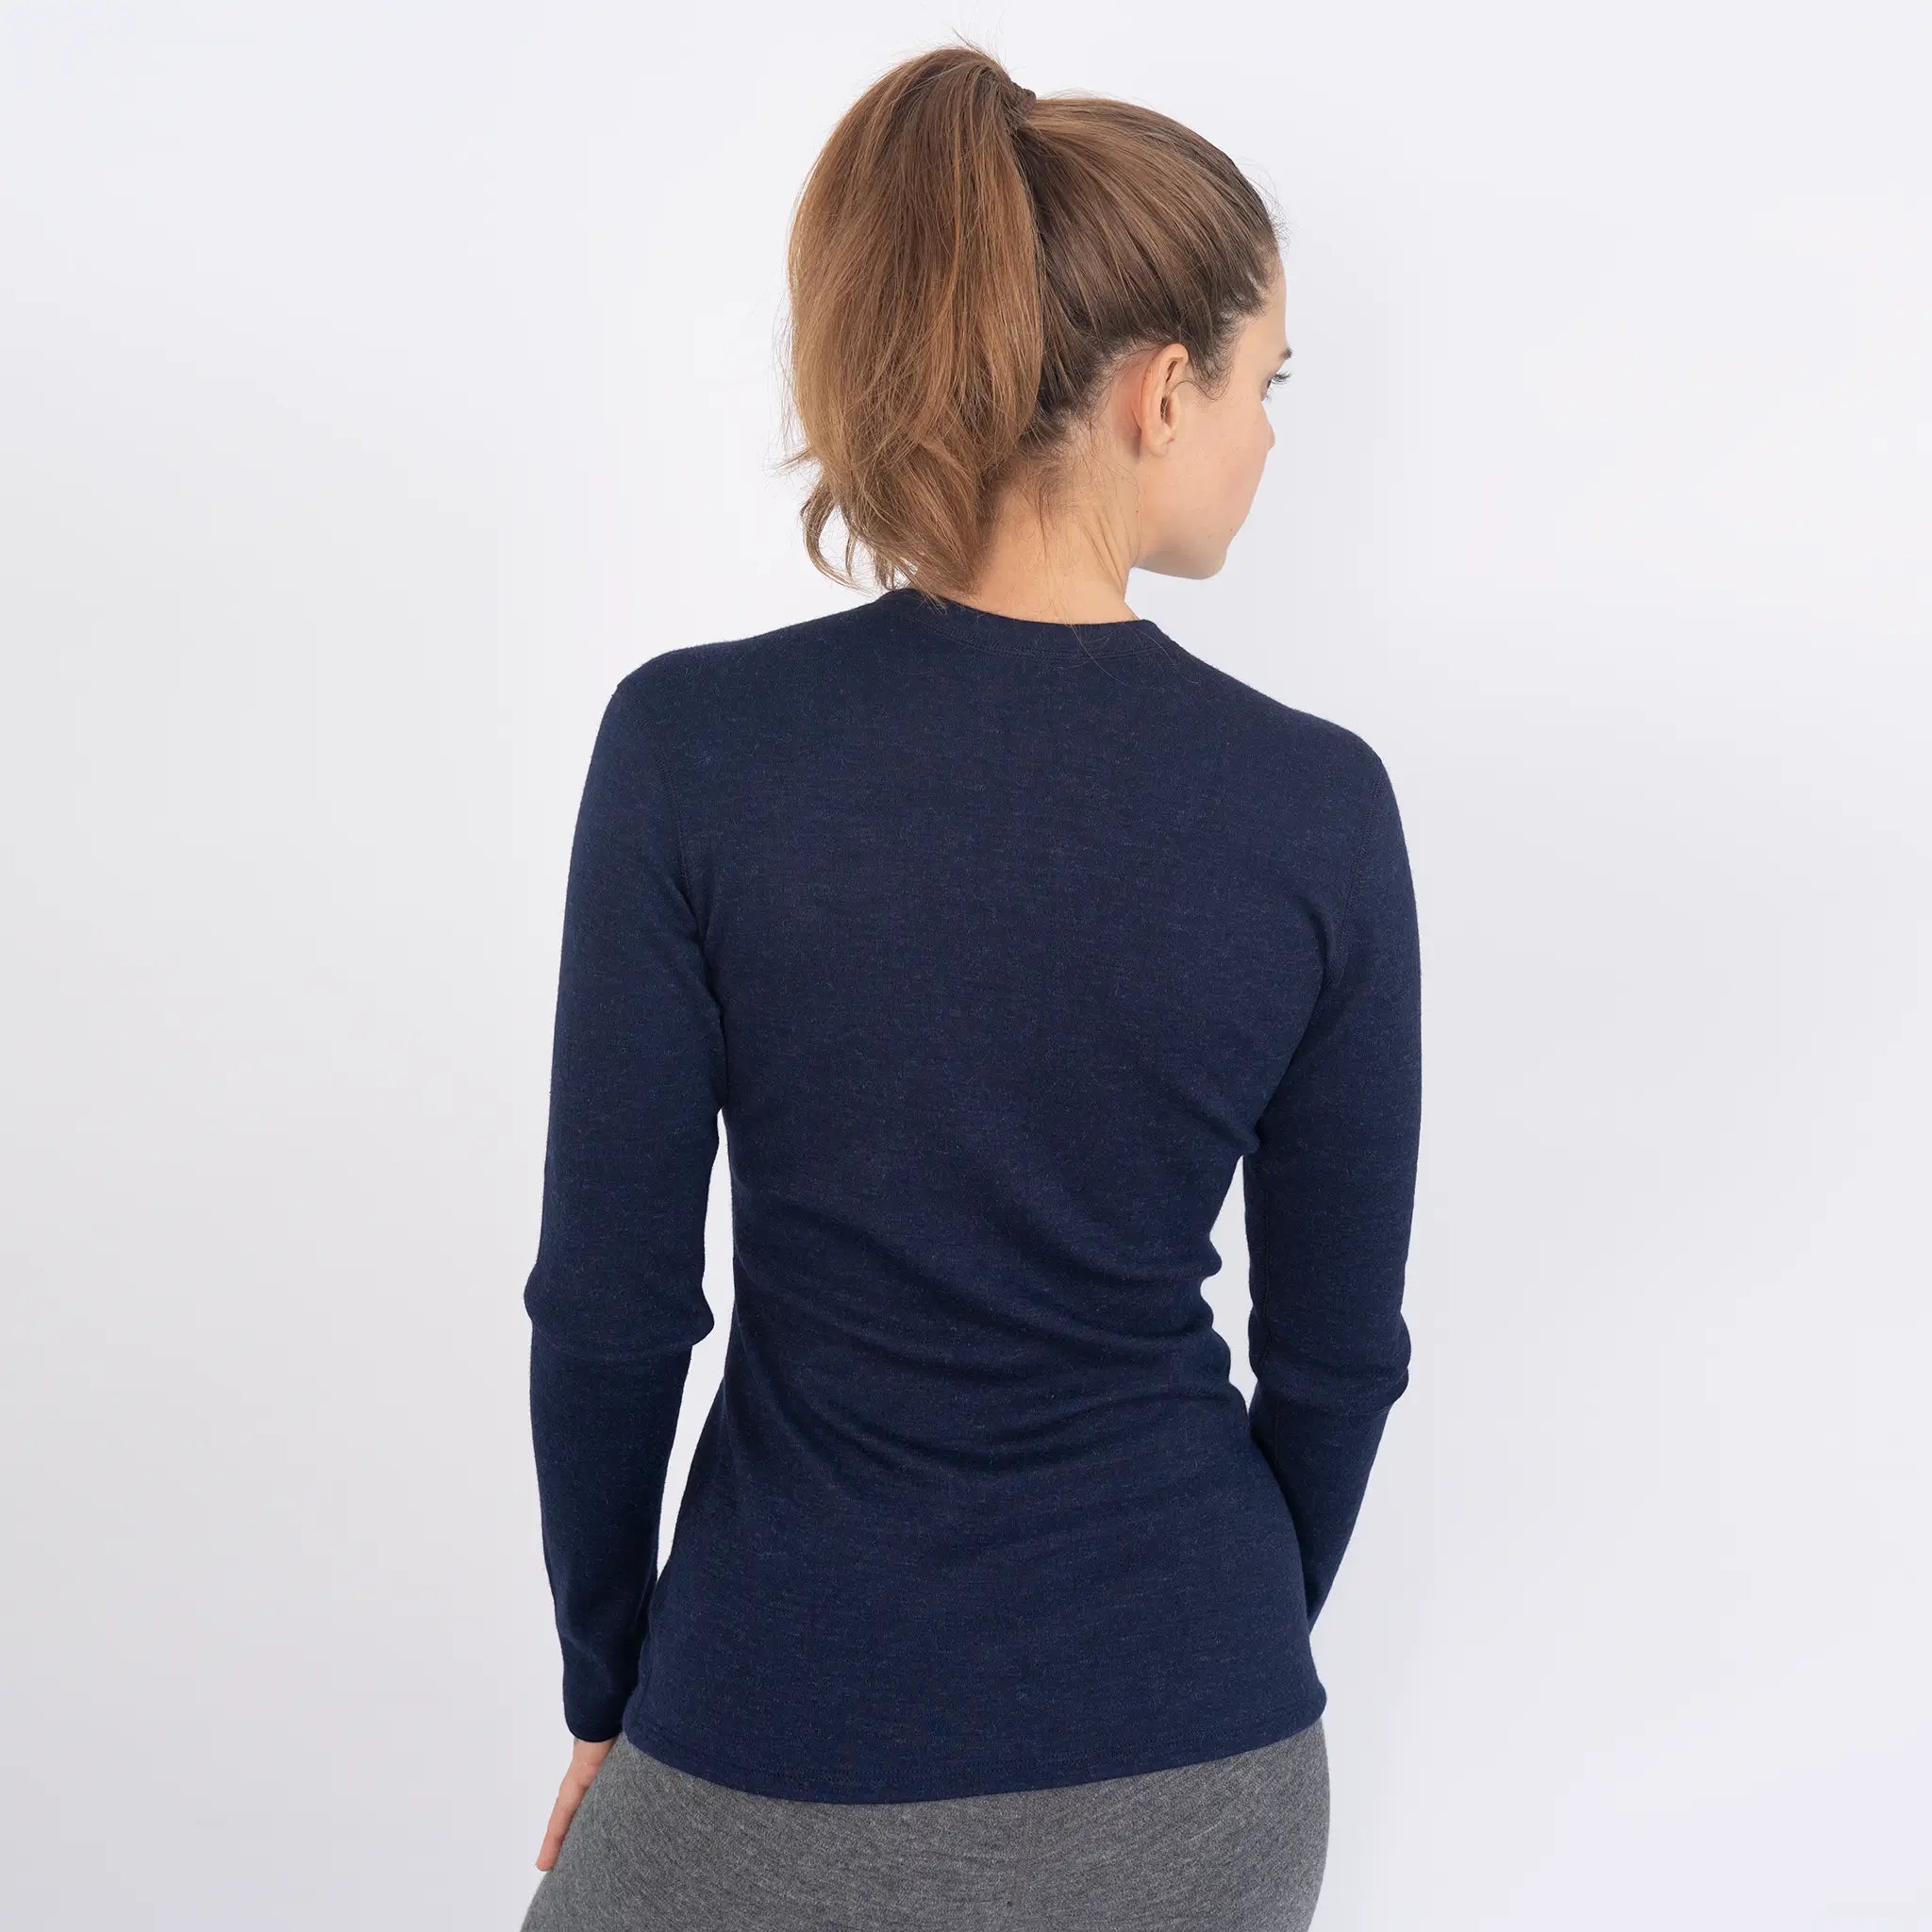 womens alpaca sweater single origin lightweight color navy blue